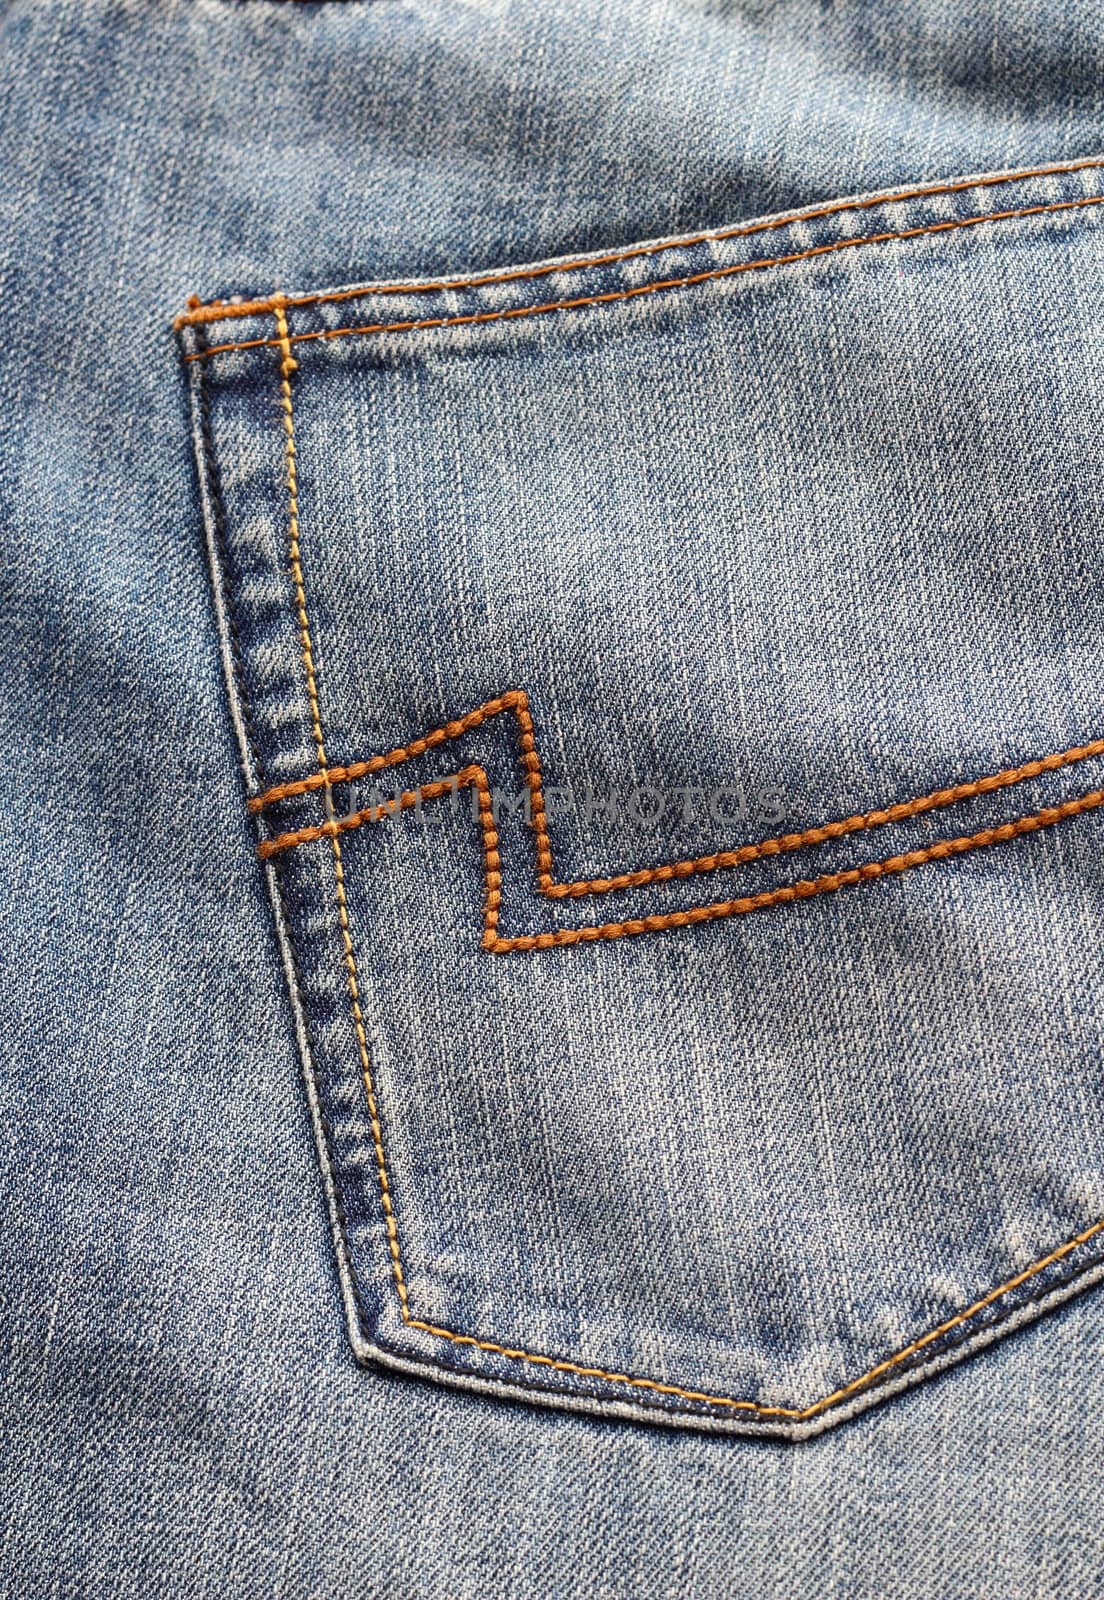 blue jeans back by taviphoto